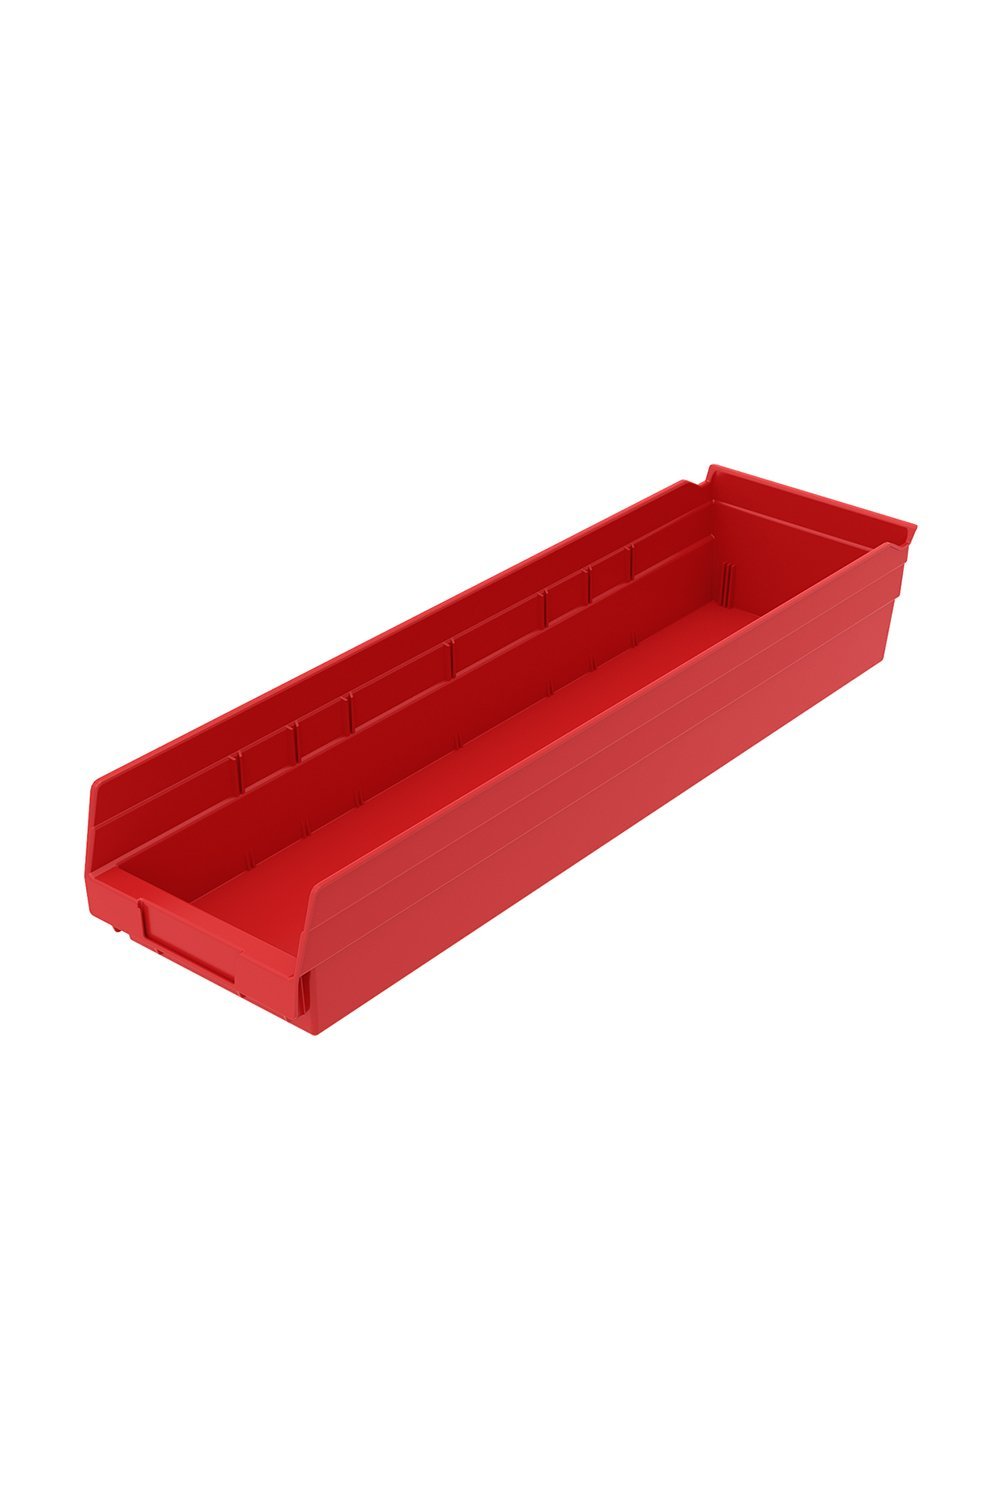 Shelf Bin for 24"D Shelves Bins & Containers Acart 23-5/8'' x 6-5/8'' x 4'' Red 